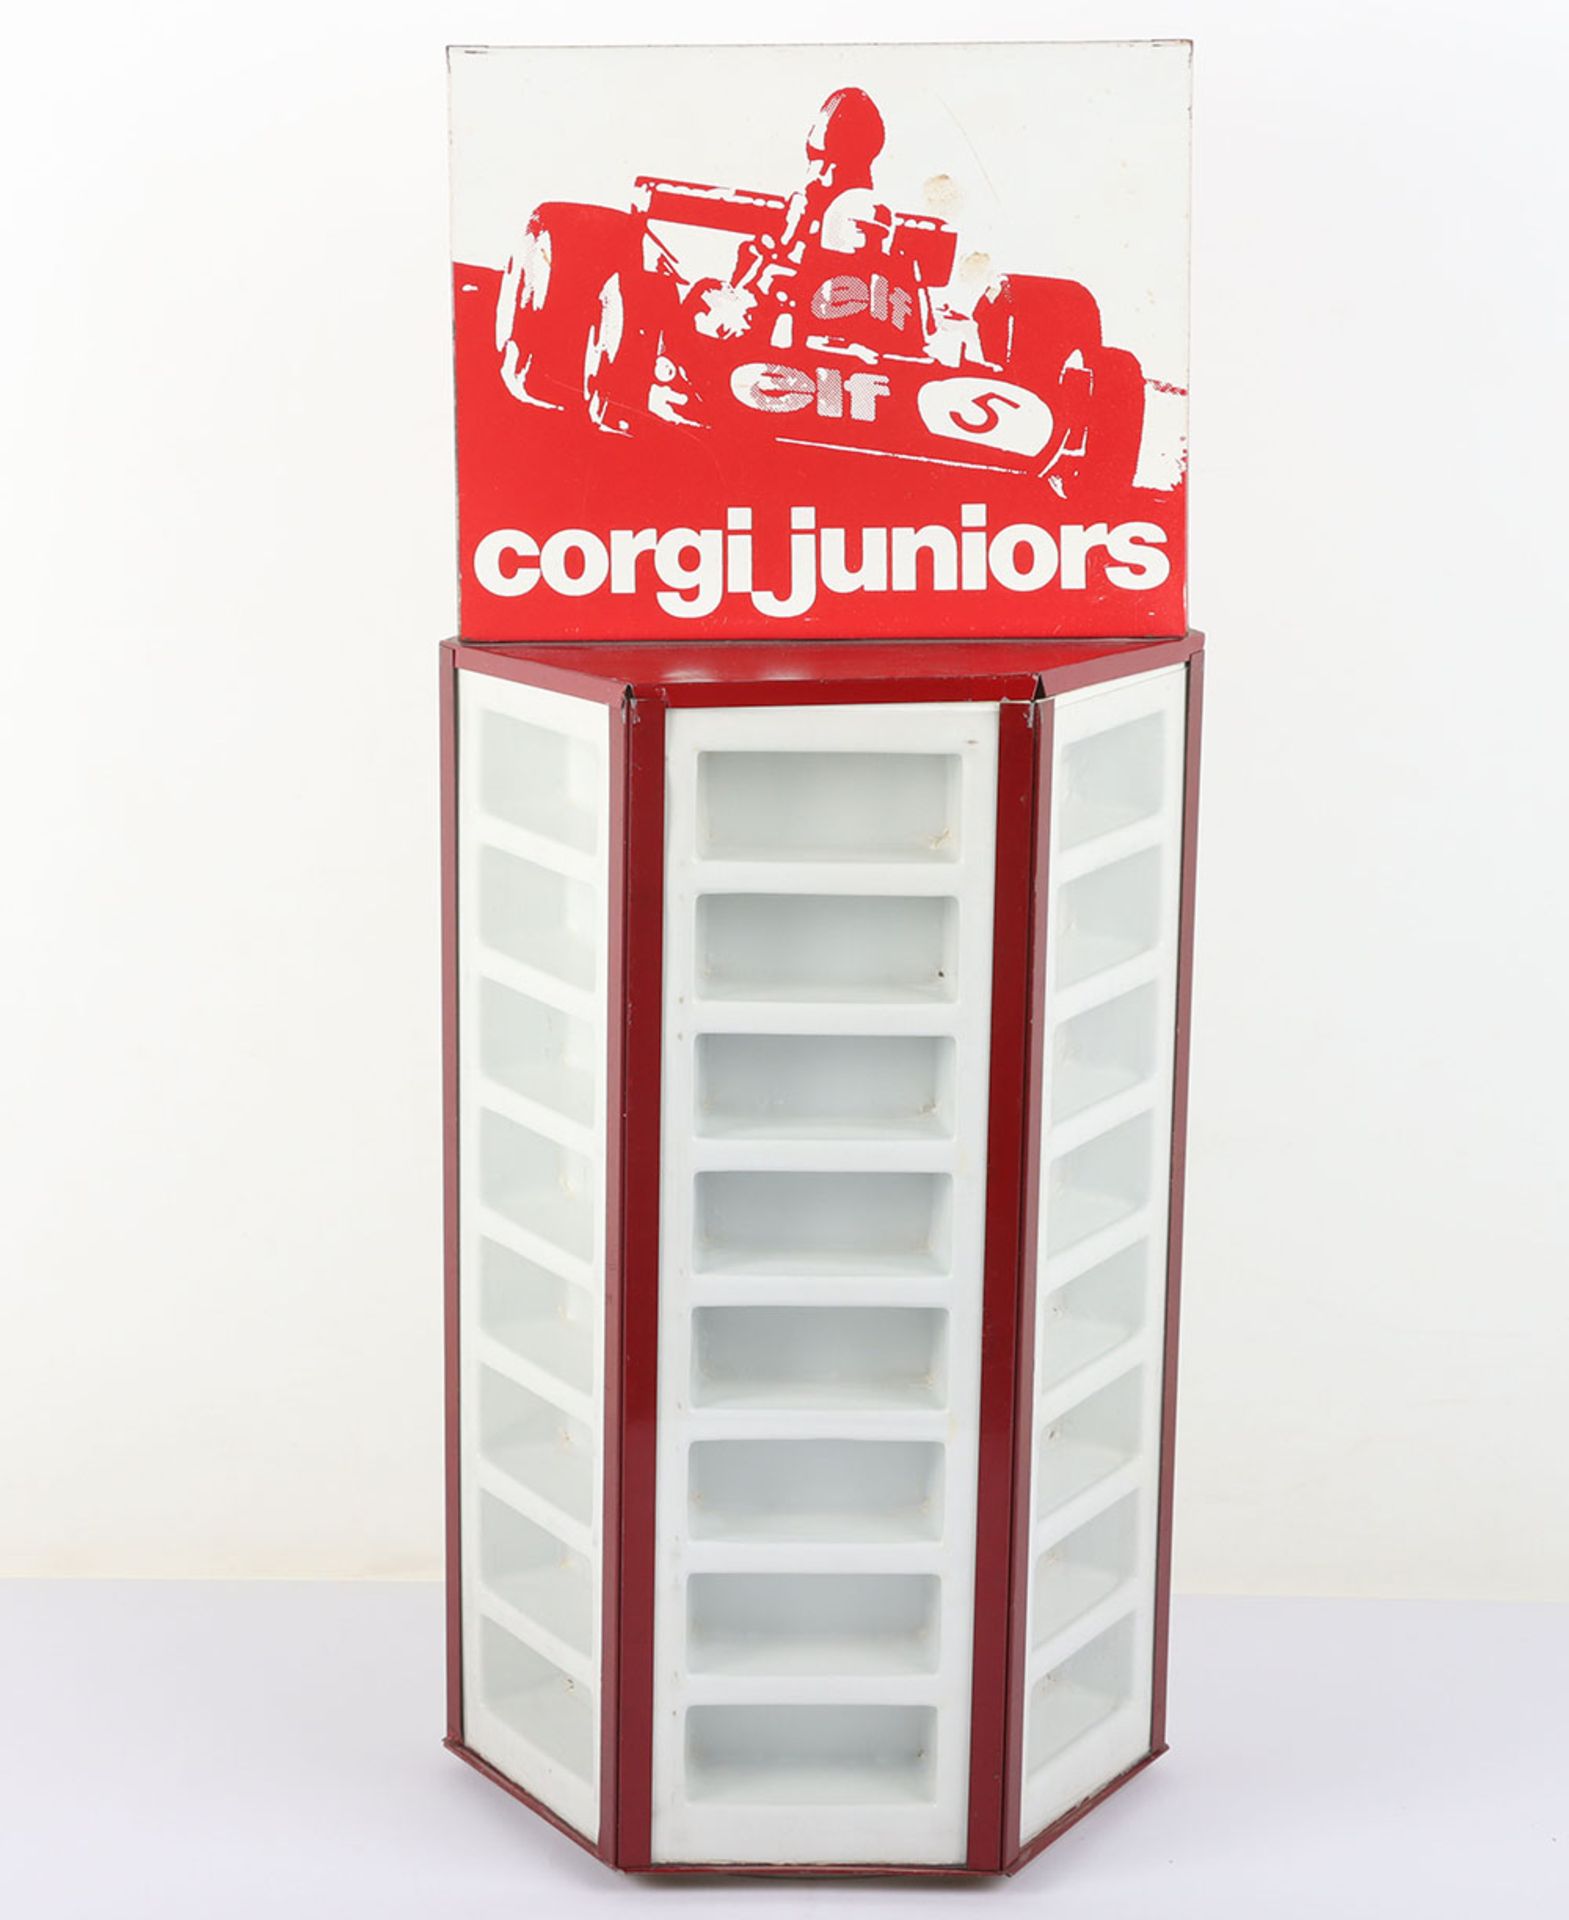 Corgi Juniors Shop Display Hexagonal Rotating Stand - Image 3 of 6